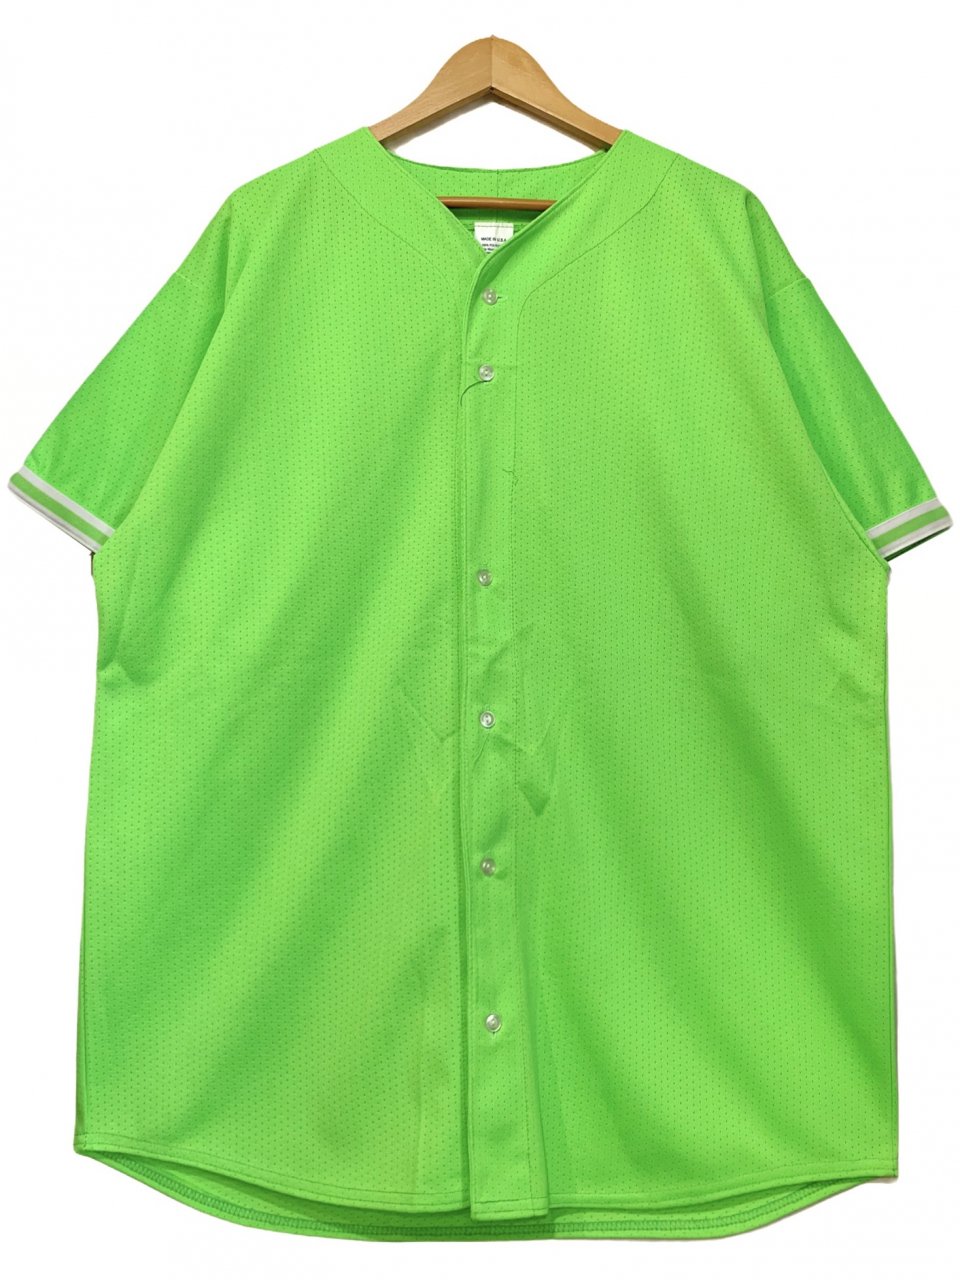 Deadstock USA製 90s UNKNOWN Plain Mesh Baseball Shirt 蛍光緑 XL ベースボールシャツ  ユニフォーム 無地 ネオングリーン アメリカ製 古着 - NEWJOKE ONLINE STORE